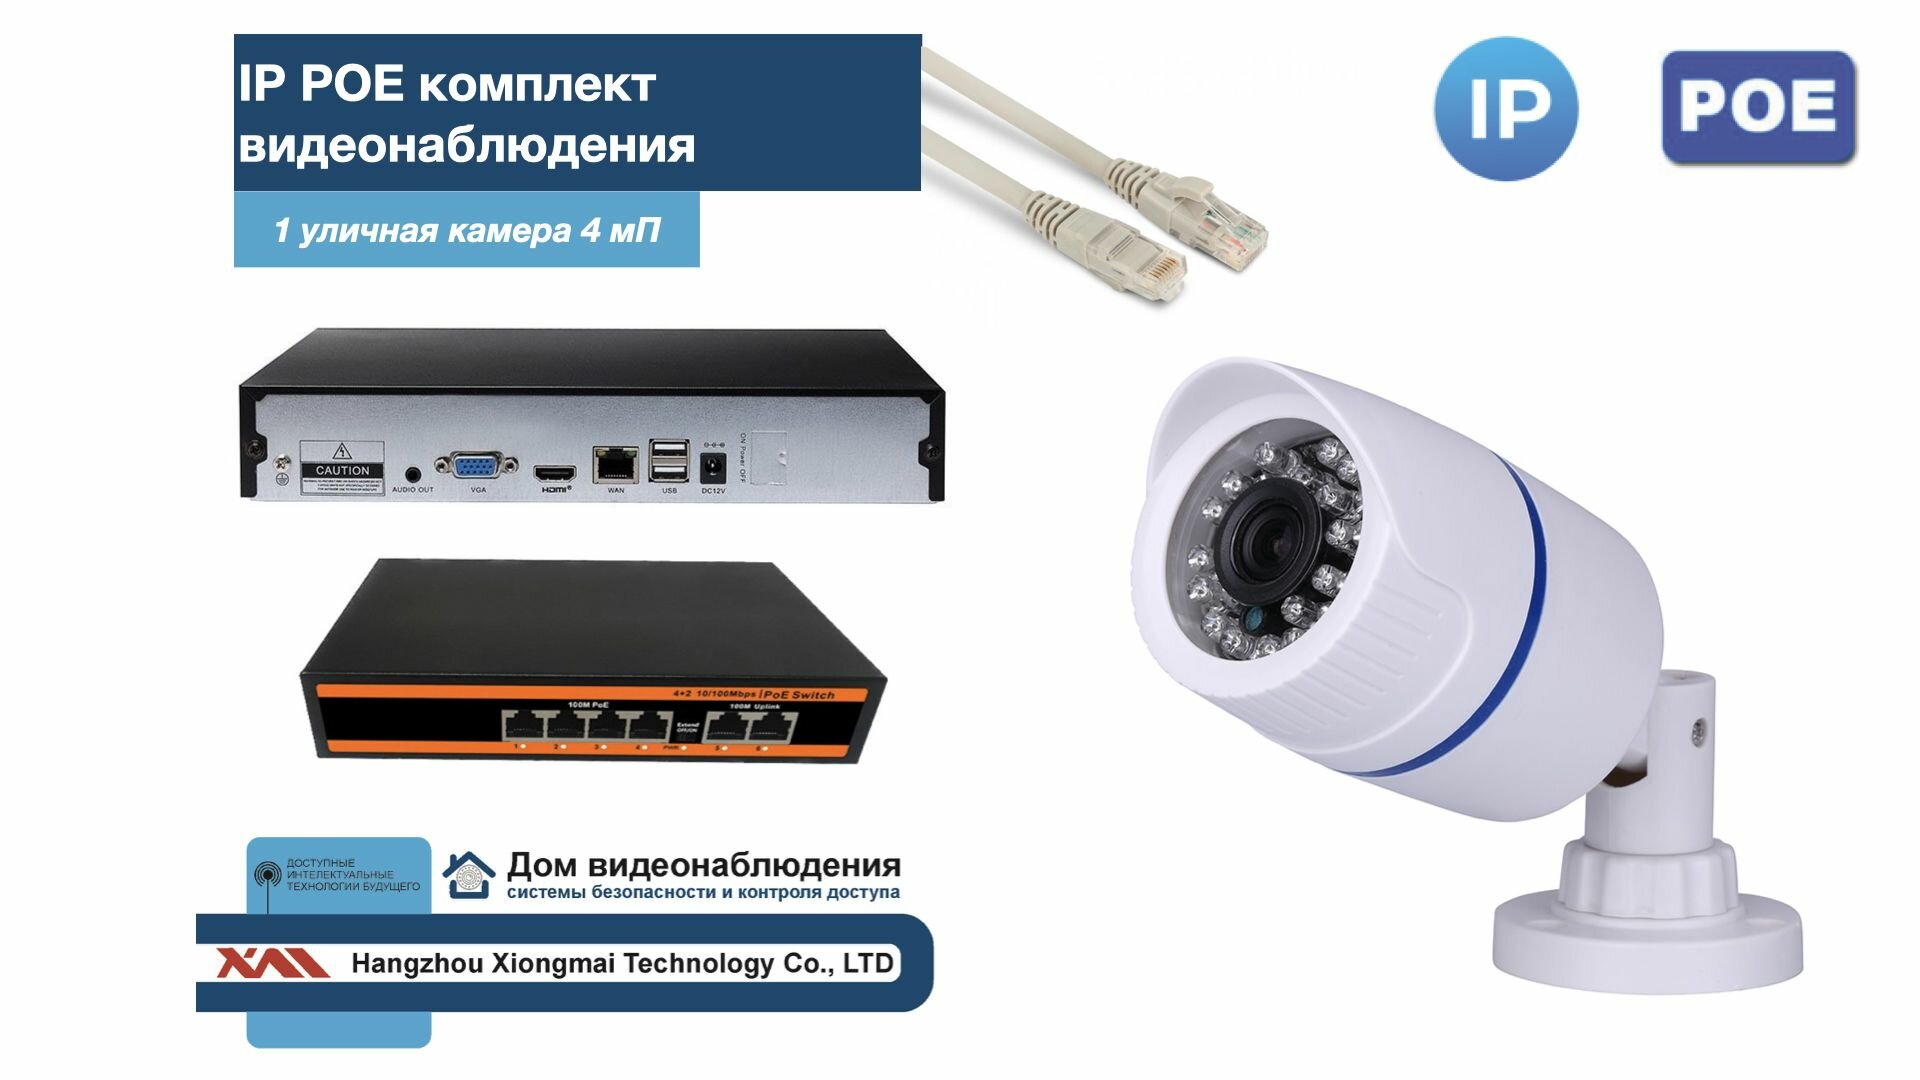 Полный IP POE комплект видеонаблюдения на 1 камеру (KIT1IPPOE100W4MP)